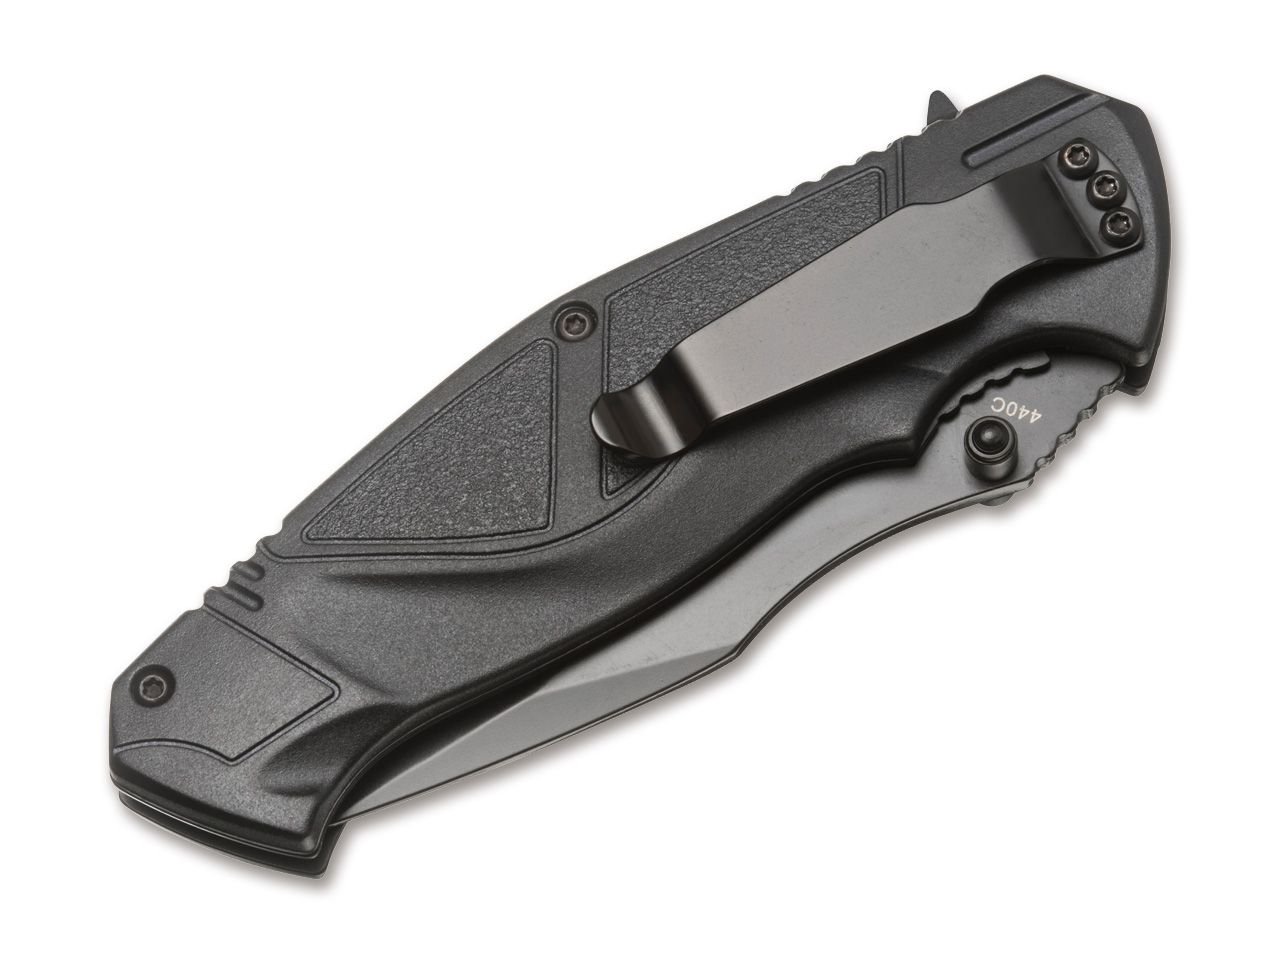 Nóż składany Magnum Advance All Black Pro